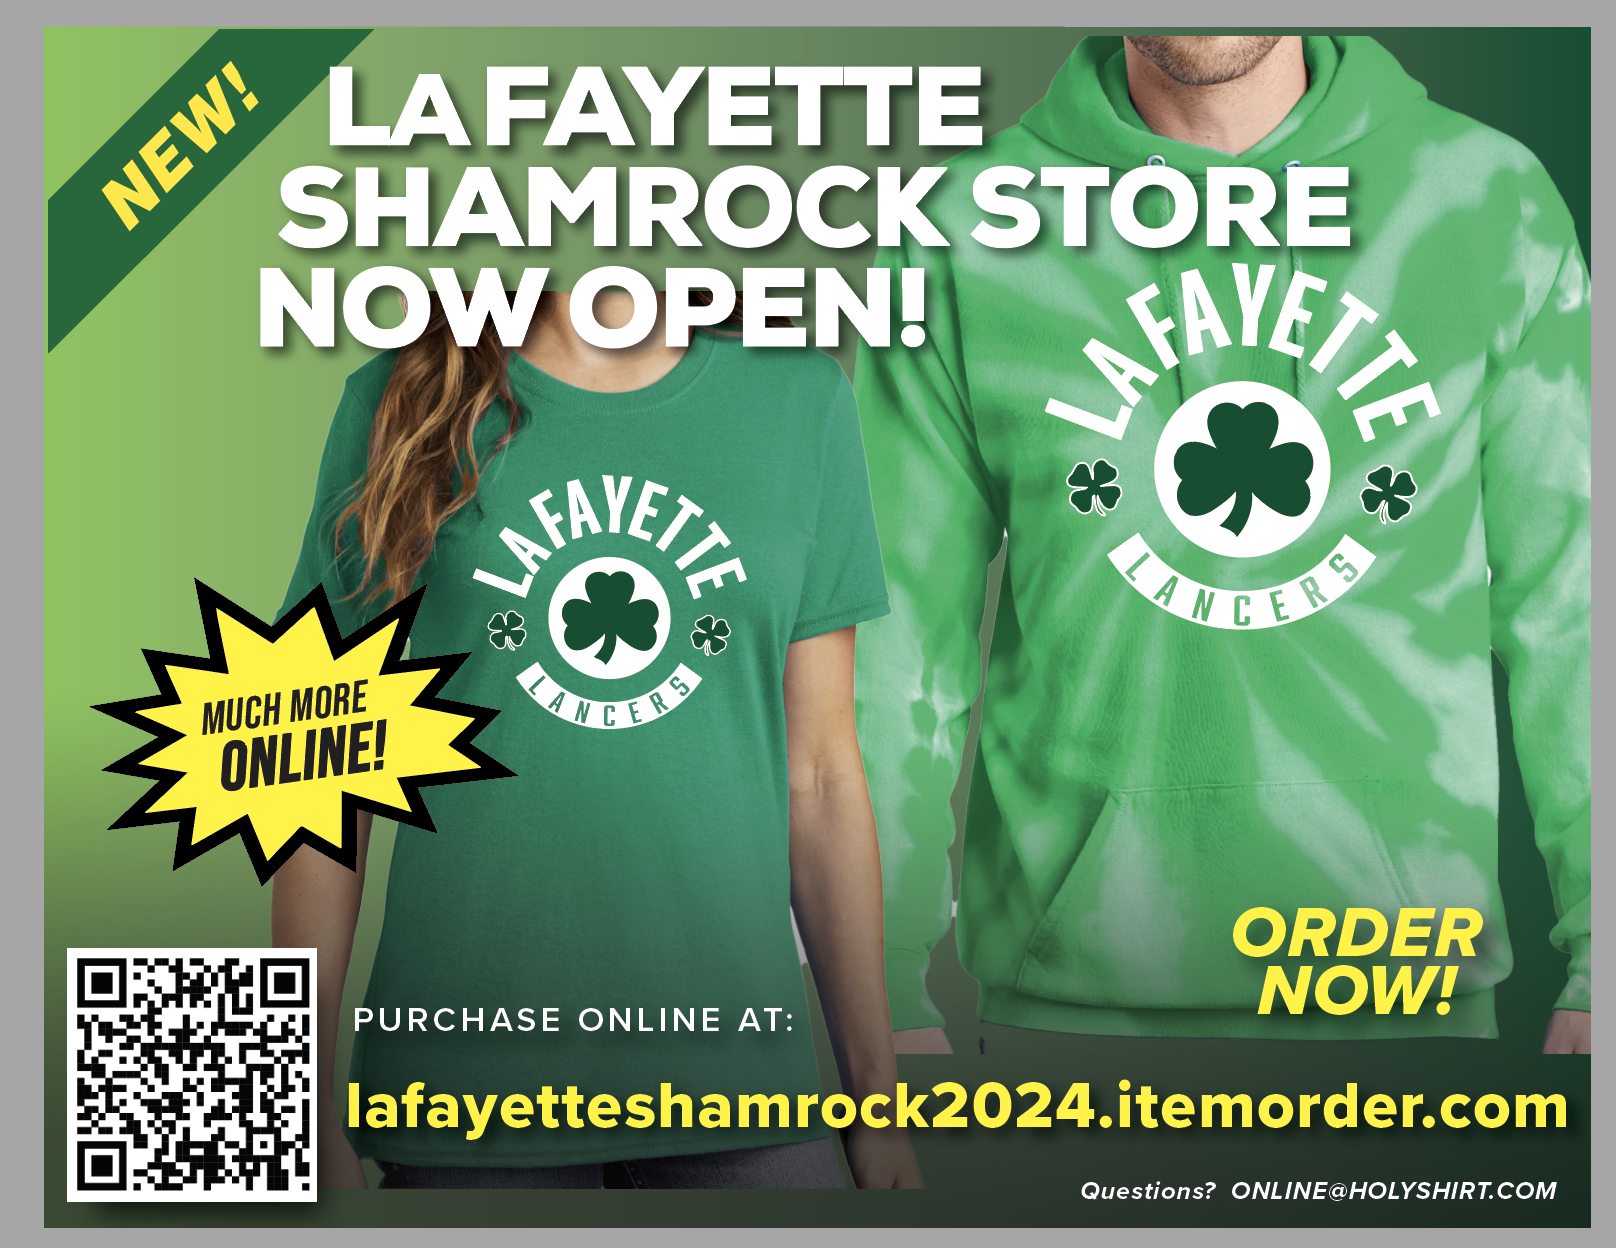 LaFayette Shamrock Store Now Open. Purchase online  at lafayetteshamrock2024.itemorder.com